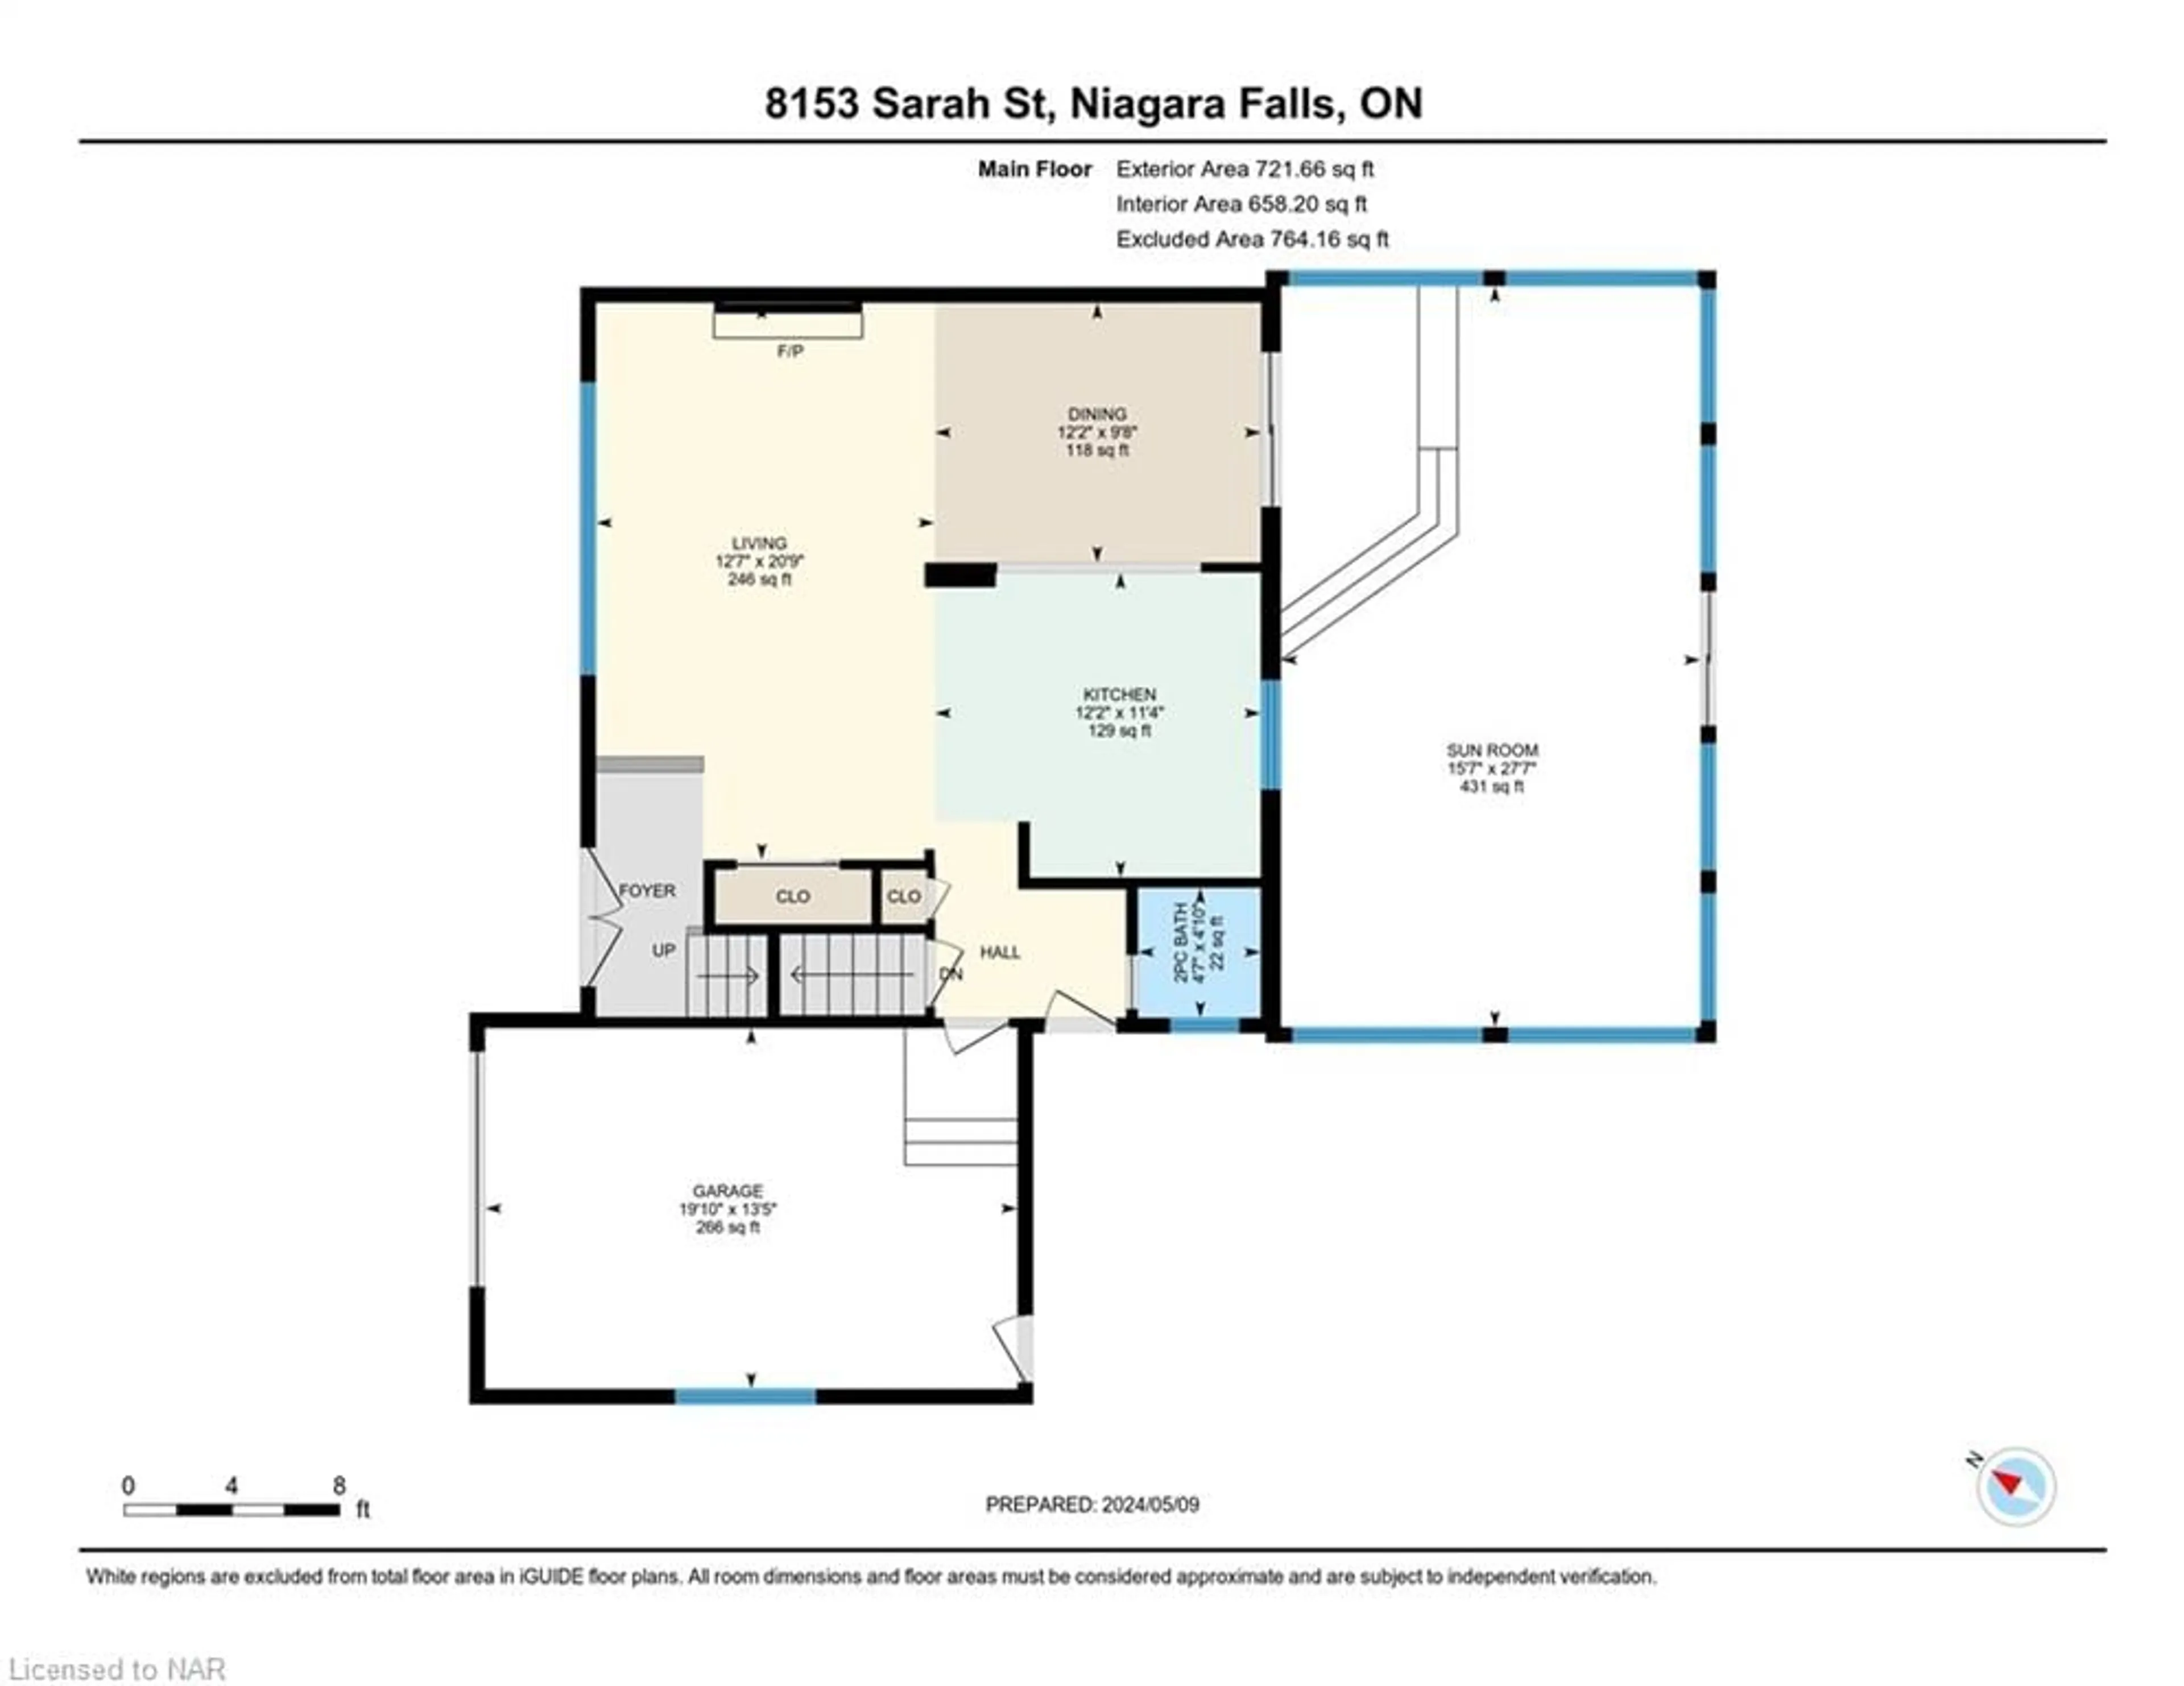 Floor plan for 8153 Sarah St, Niagara Falls Ontario L2G 6V1